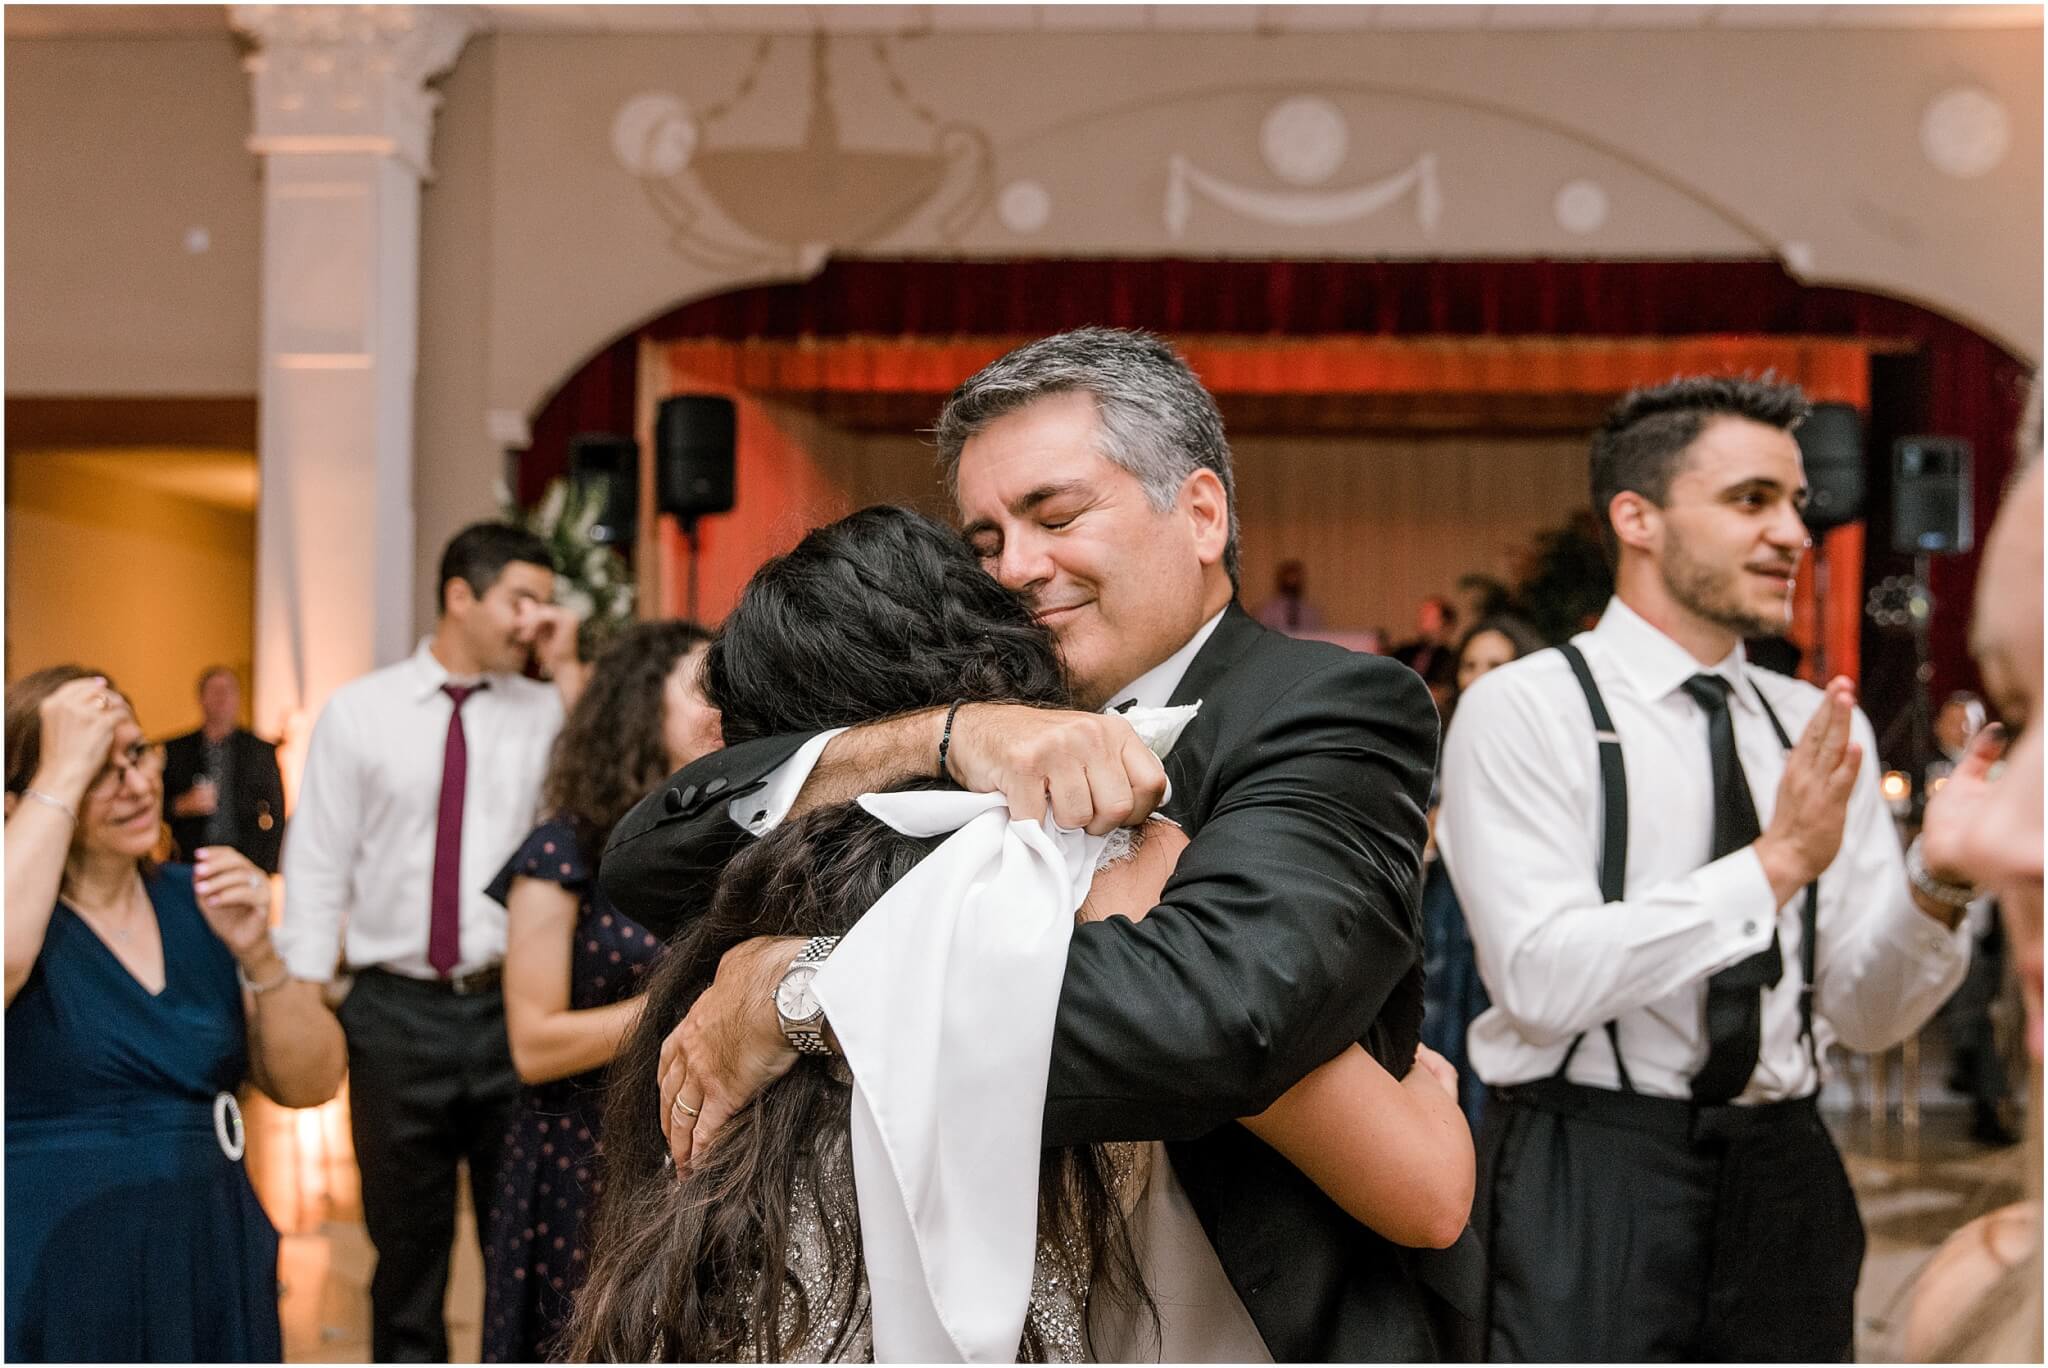 Dad hugging bride at a wedding reception in Winston-Salem